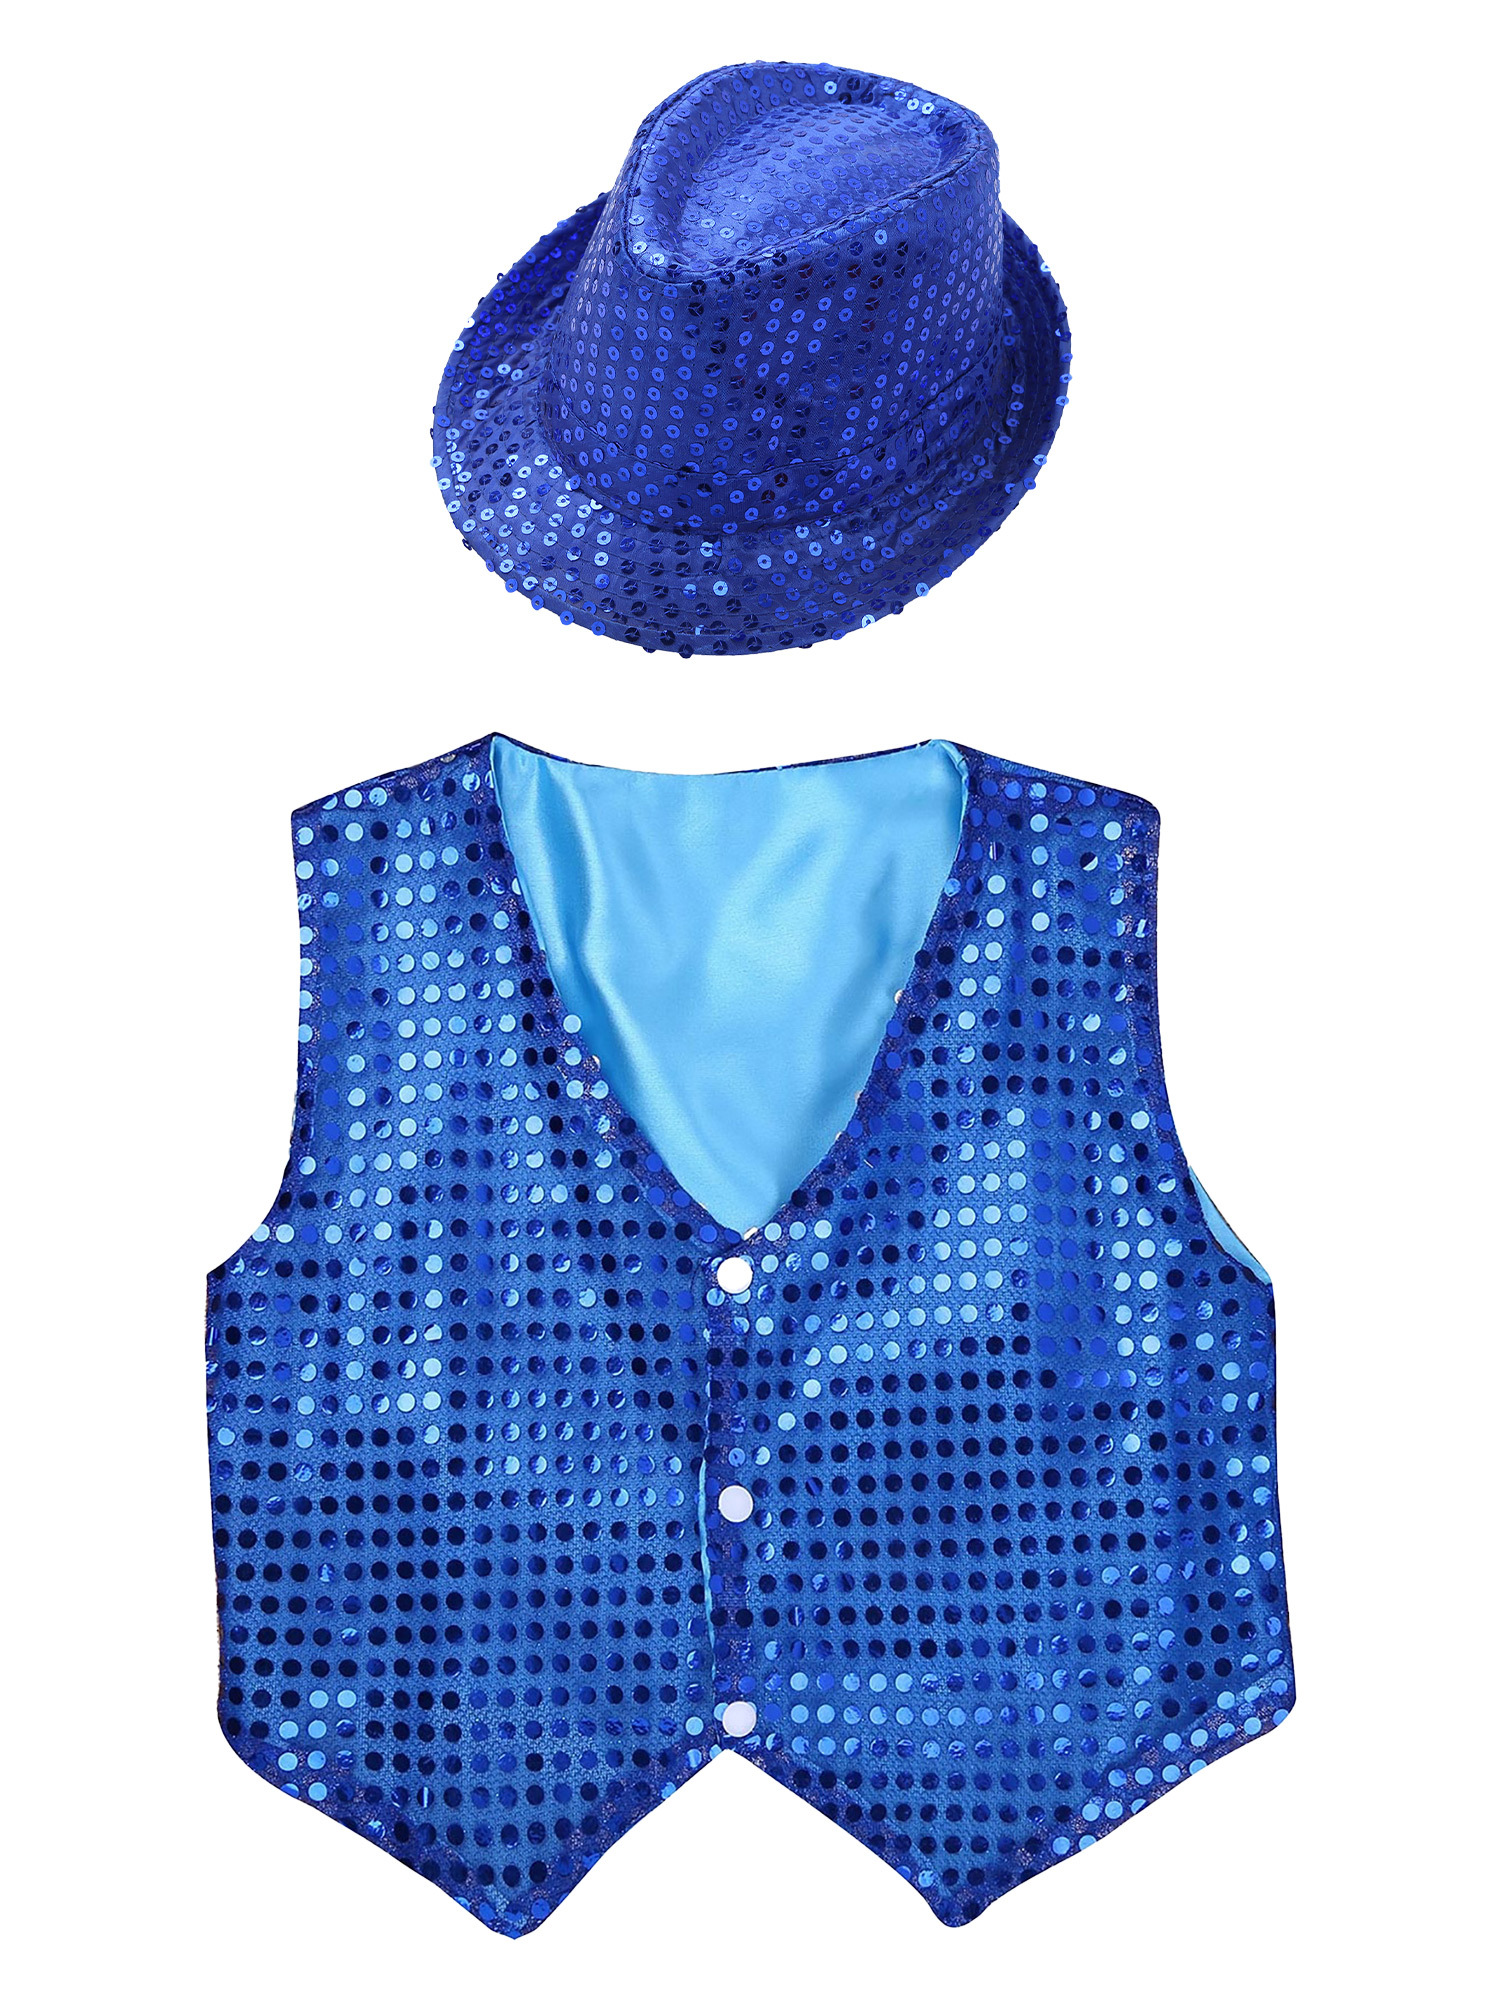 IEFIEL Kids Boys Sparkle Sequins Button Down Vest with Hat Dance Outfit Set Hip Hop Jazz Stage Performance Costume Blue 7-8 - image 3 of 7